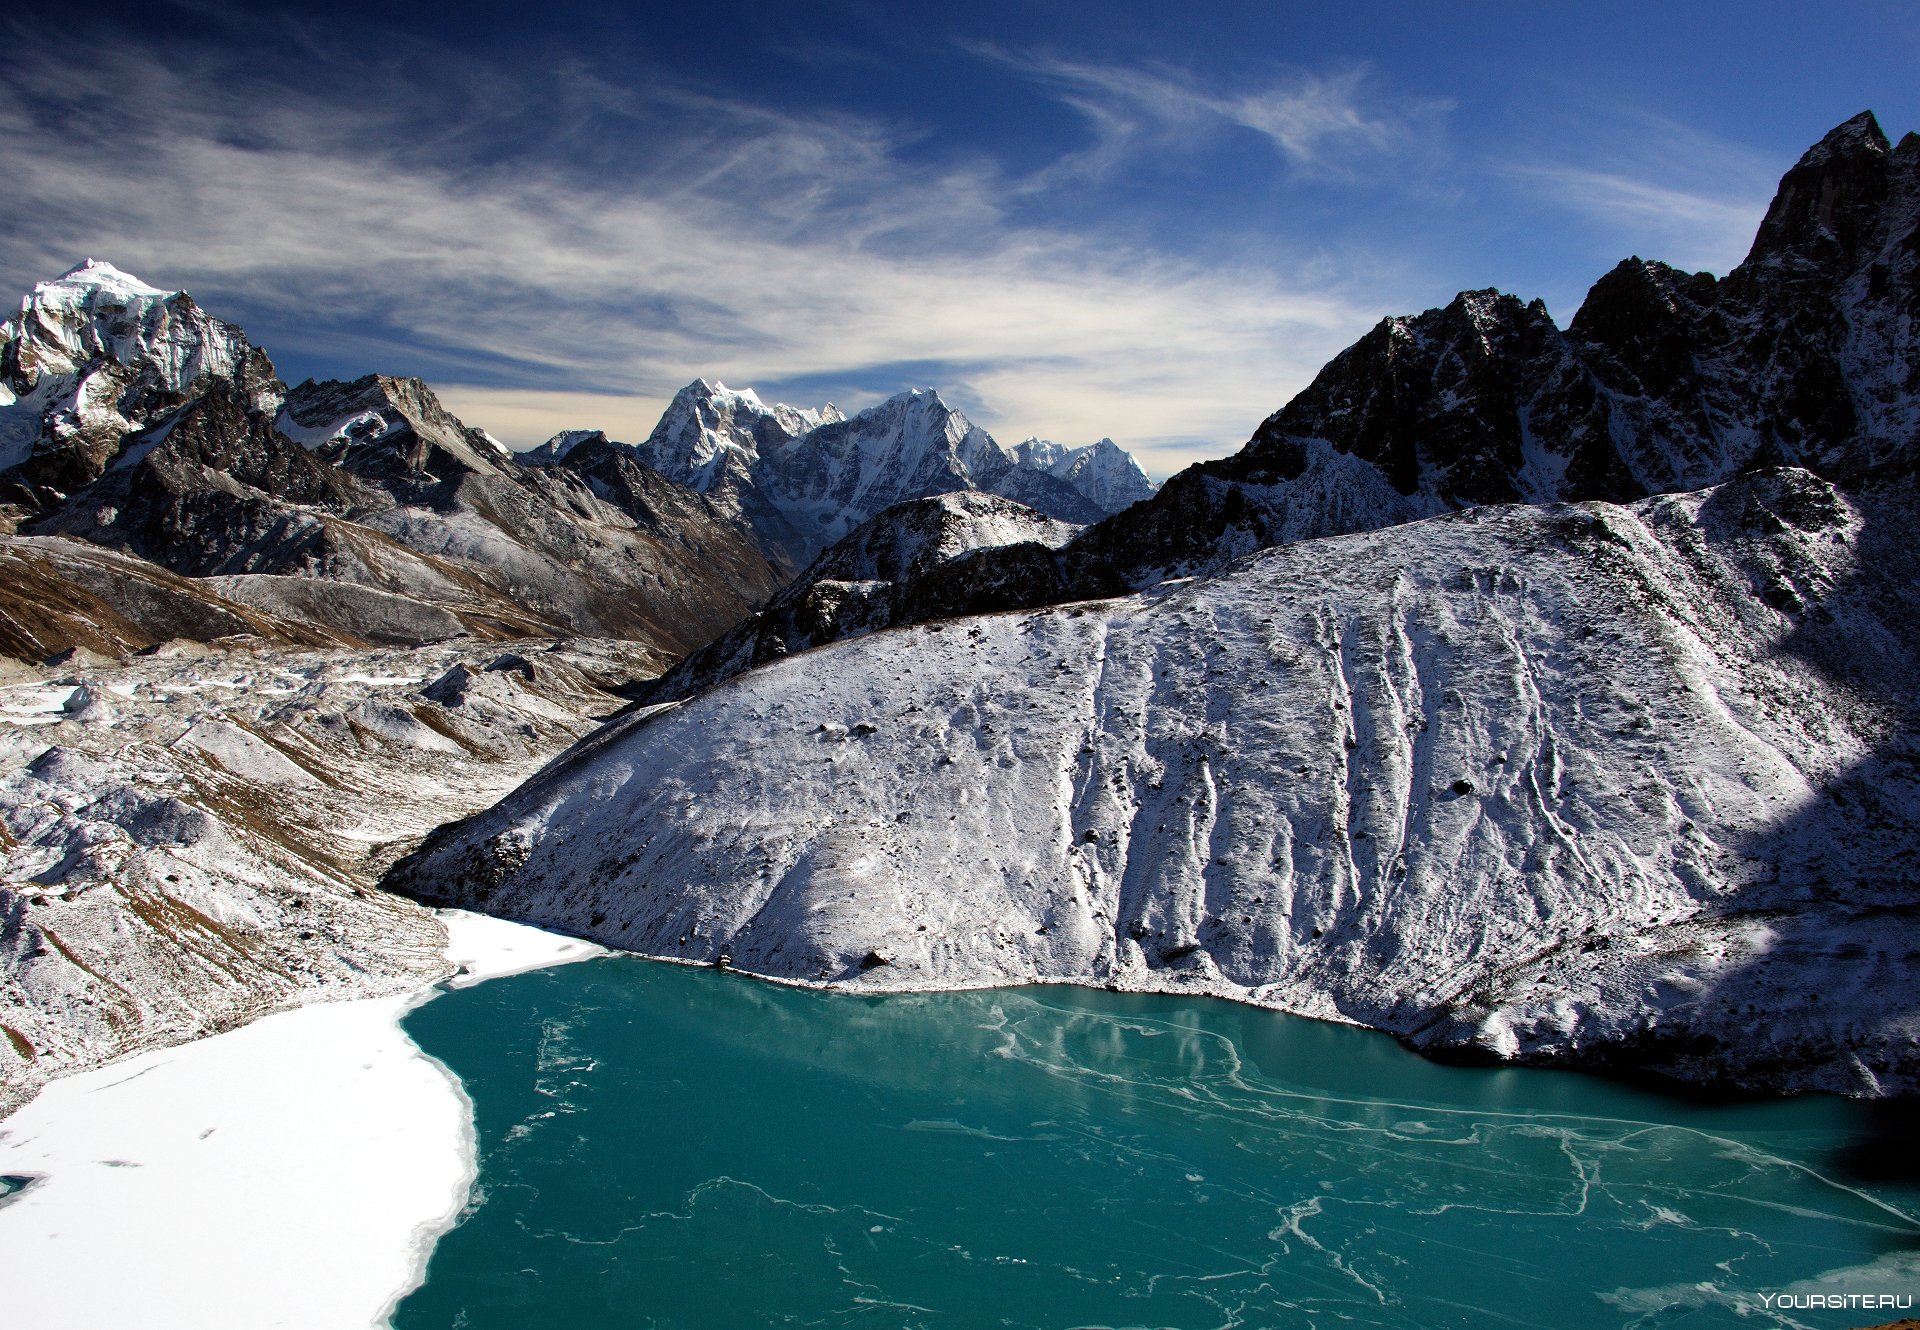 Гималаи озера. Озеро Гокио Непал. Ледник Кхумбу. Ледники Гималаев. Бирюзовое озеро Дудх Покхари, Гималаи.